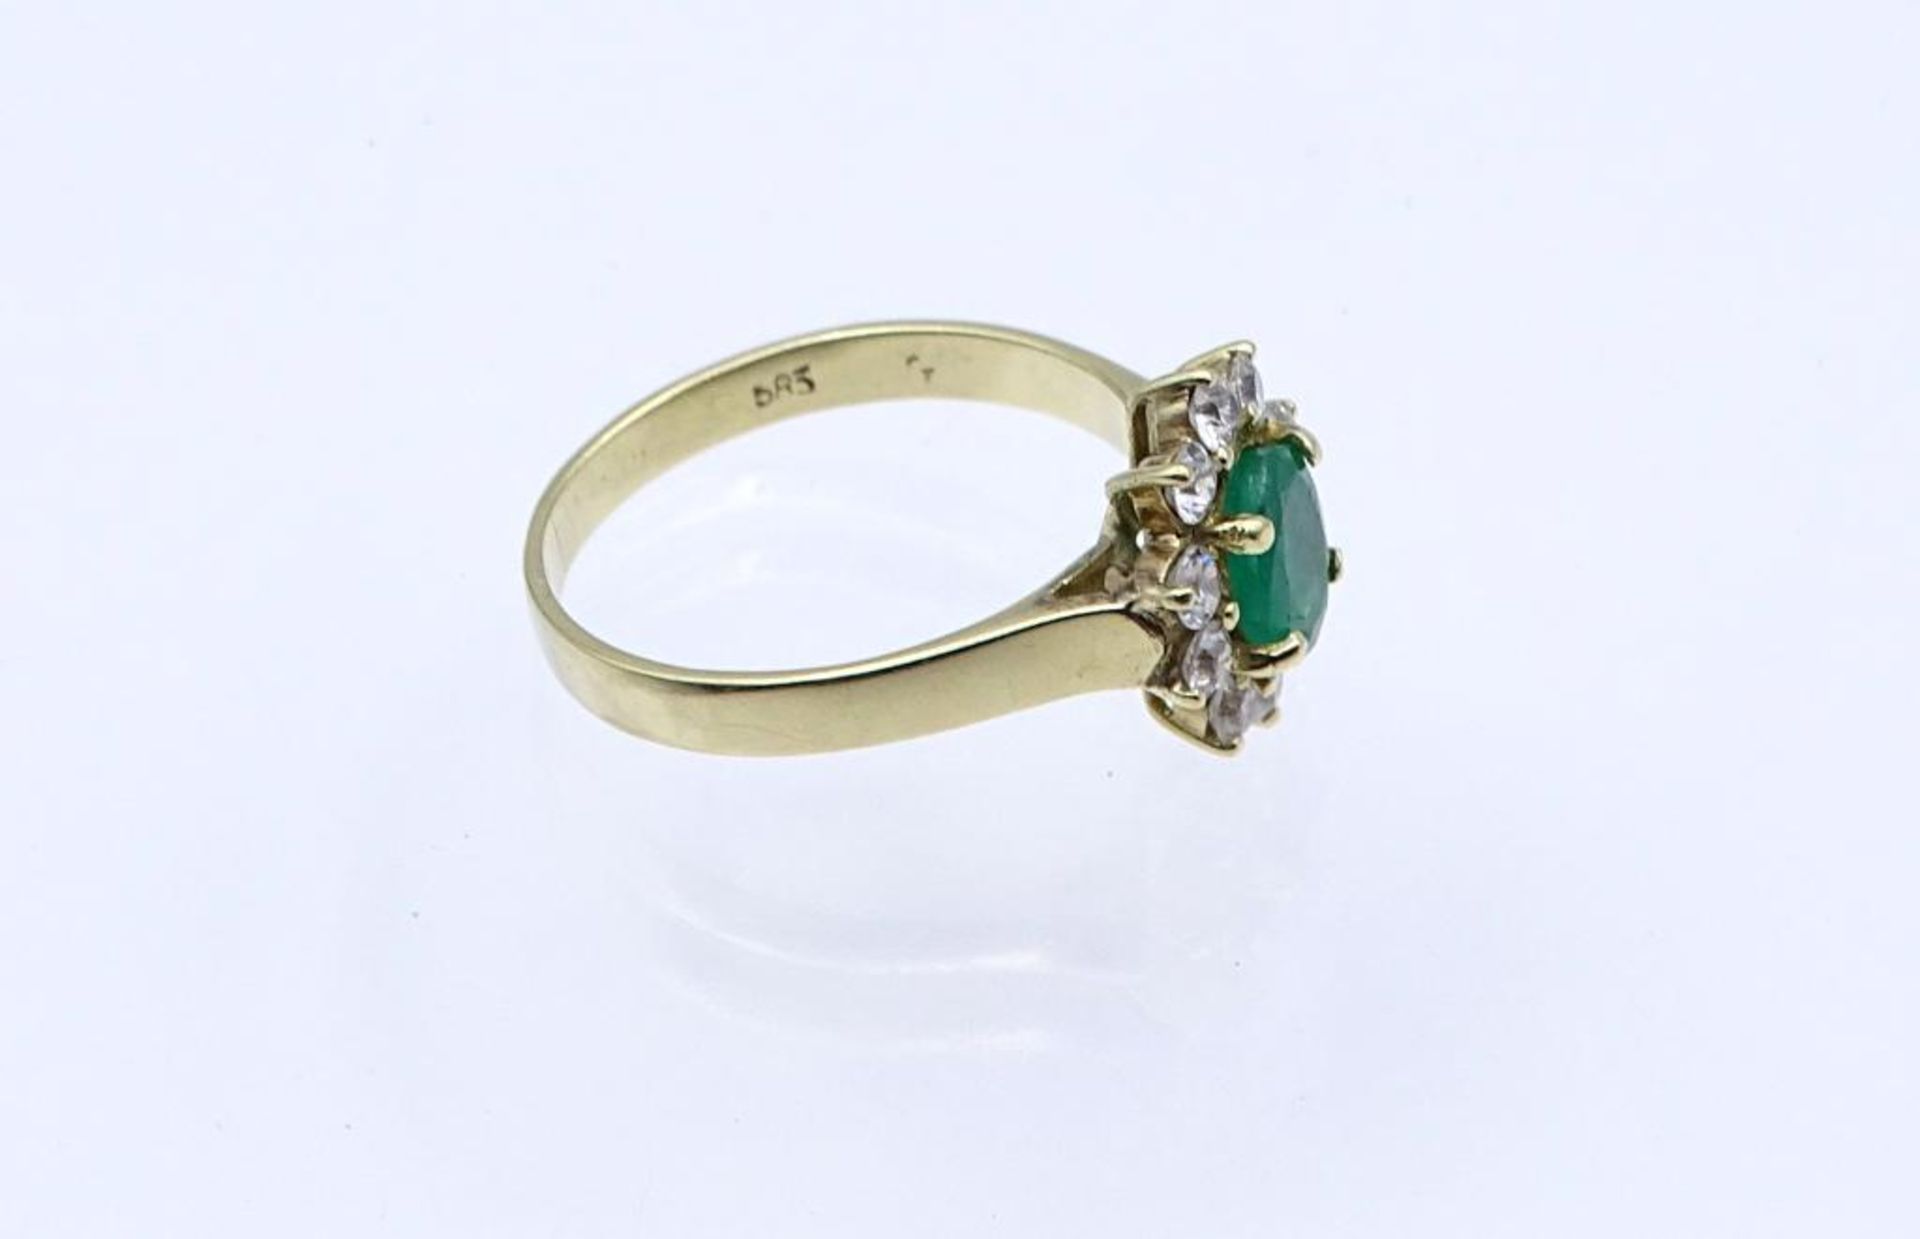 Smaragd-Zirkonia-Ring, GG 585/000, 3,40gr., RG 55- - -22.61 % buyer's premium on the hammer priceVAT - Bild 2 aus 3